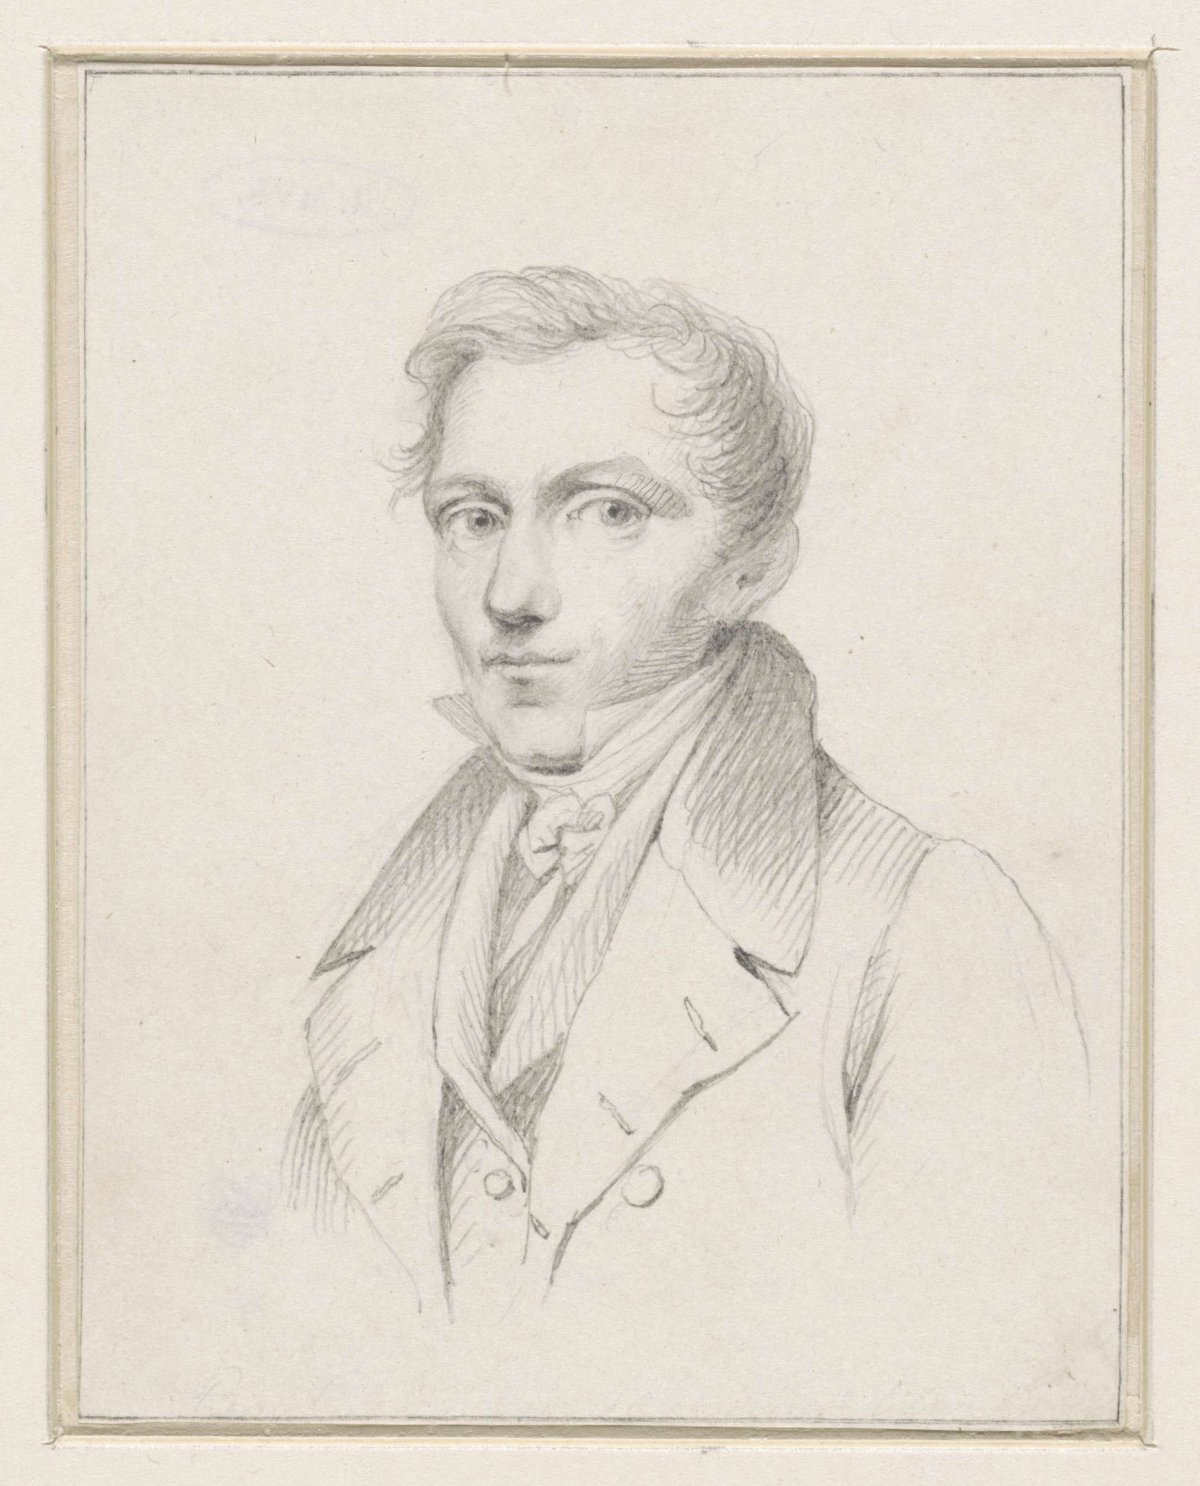 Self-portrait (?) of Bartholomeus Johannes van Hove, Bartholomeus Johannes van Hove, 1810 - 1850